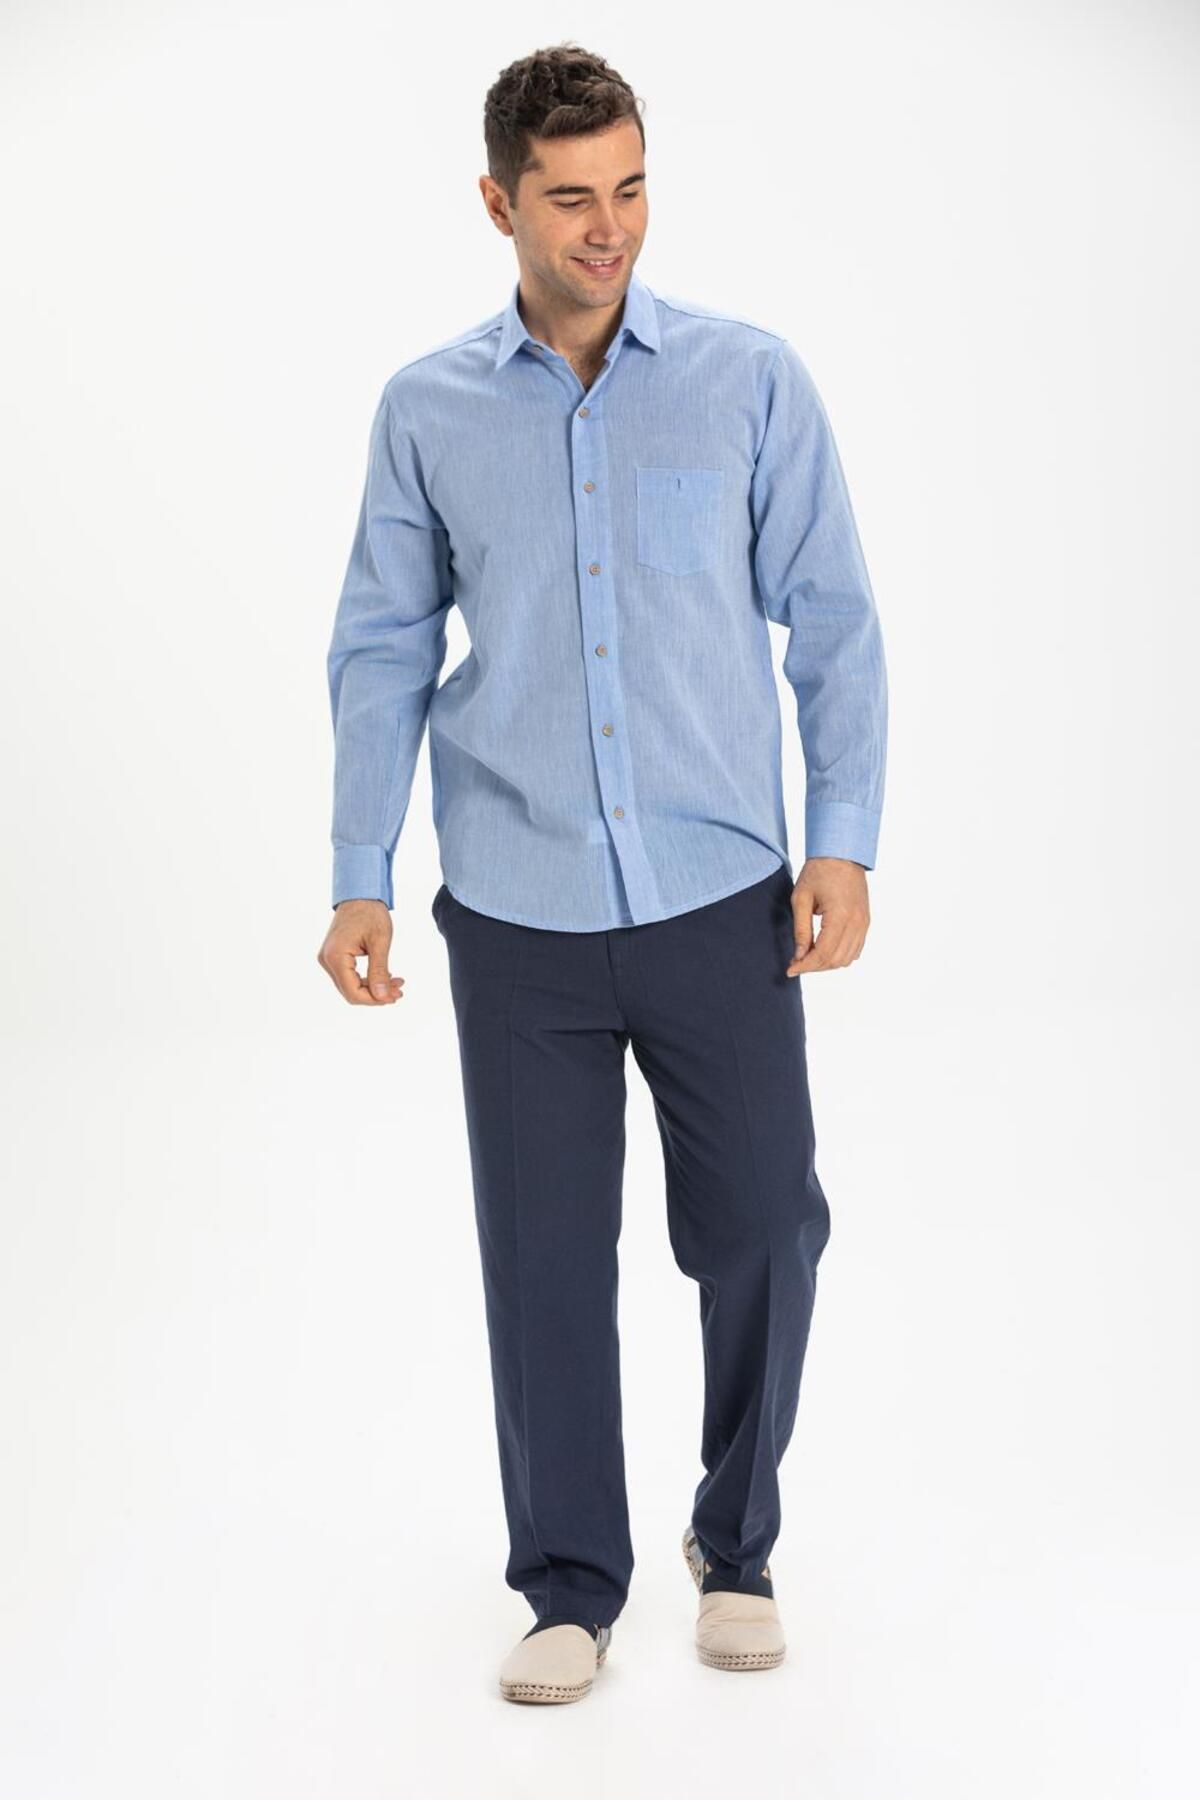 Eliş Şile Bezi پیراهن مردانه آستین بلند تک جیب پارچه شیله سایز بزرگ 3032 آبی